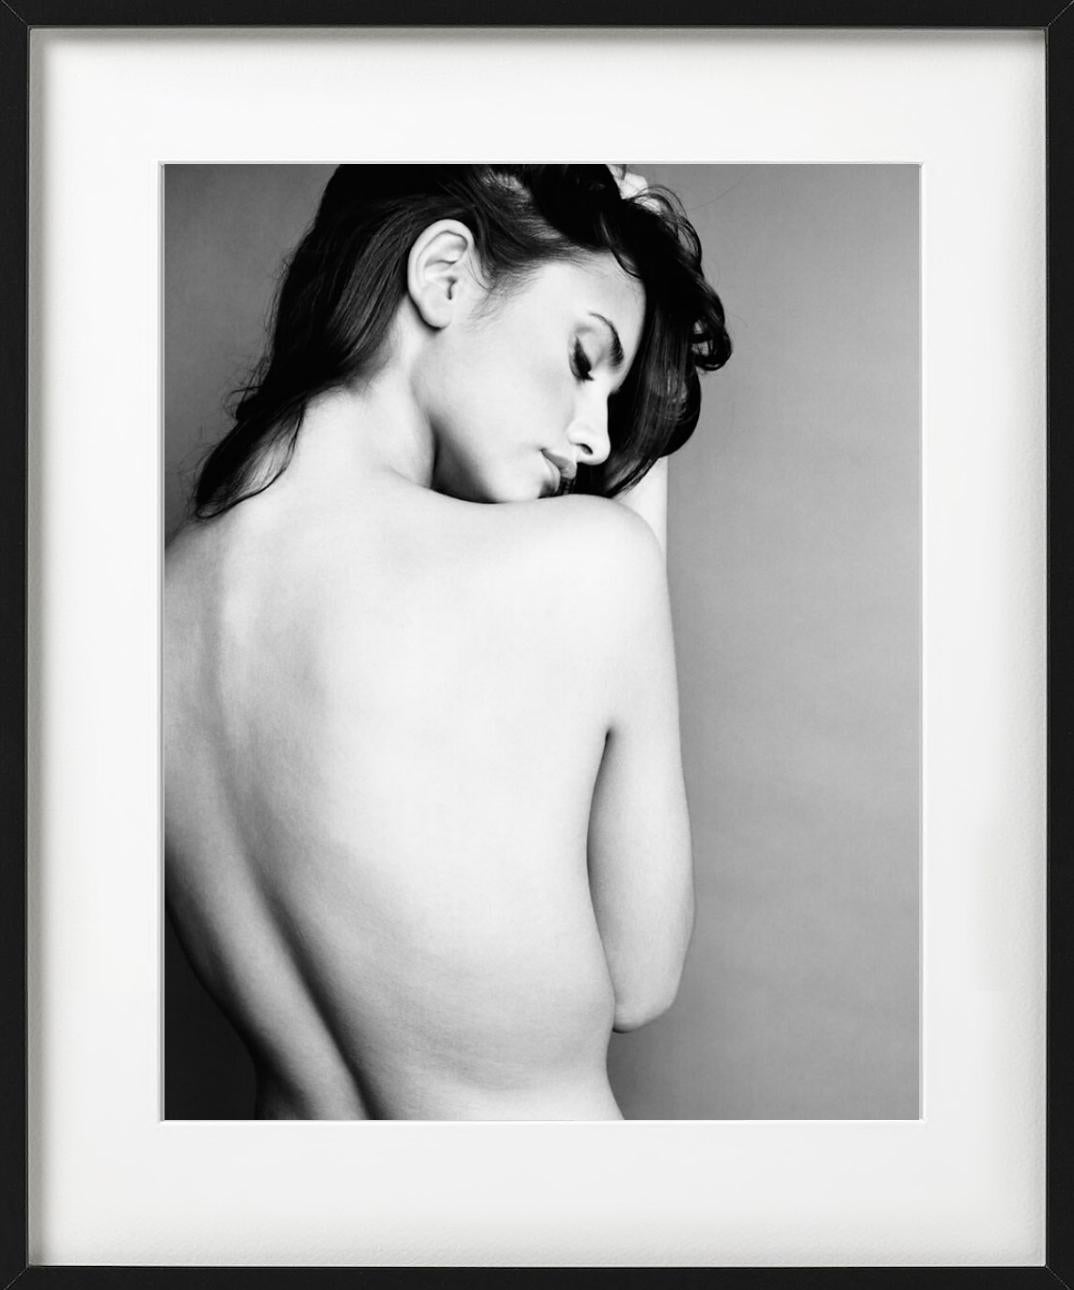 Penelope Cruz II - b&w photo of the nude actress, fine art photography, 1998 - Contemporary Photograph by Antoine Verglas